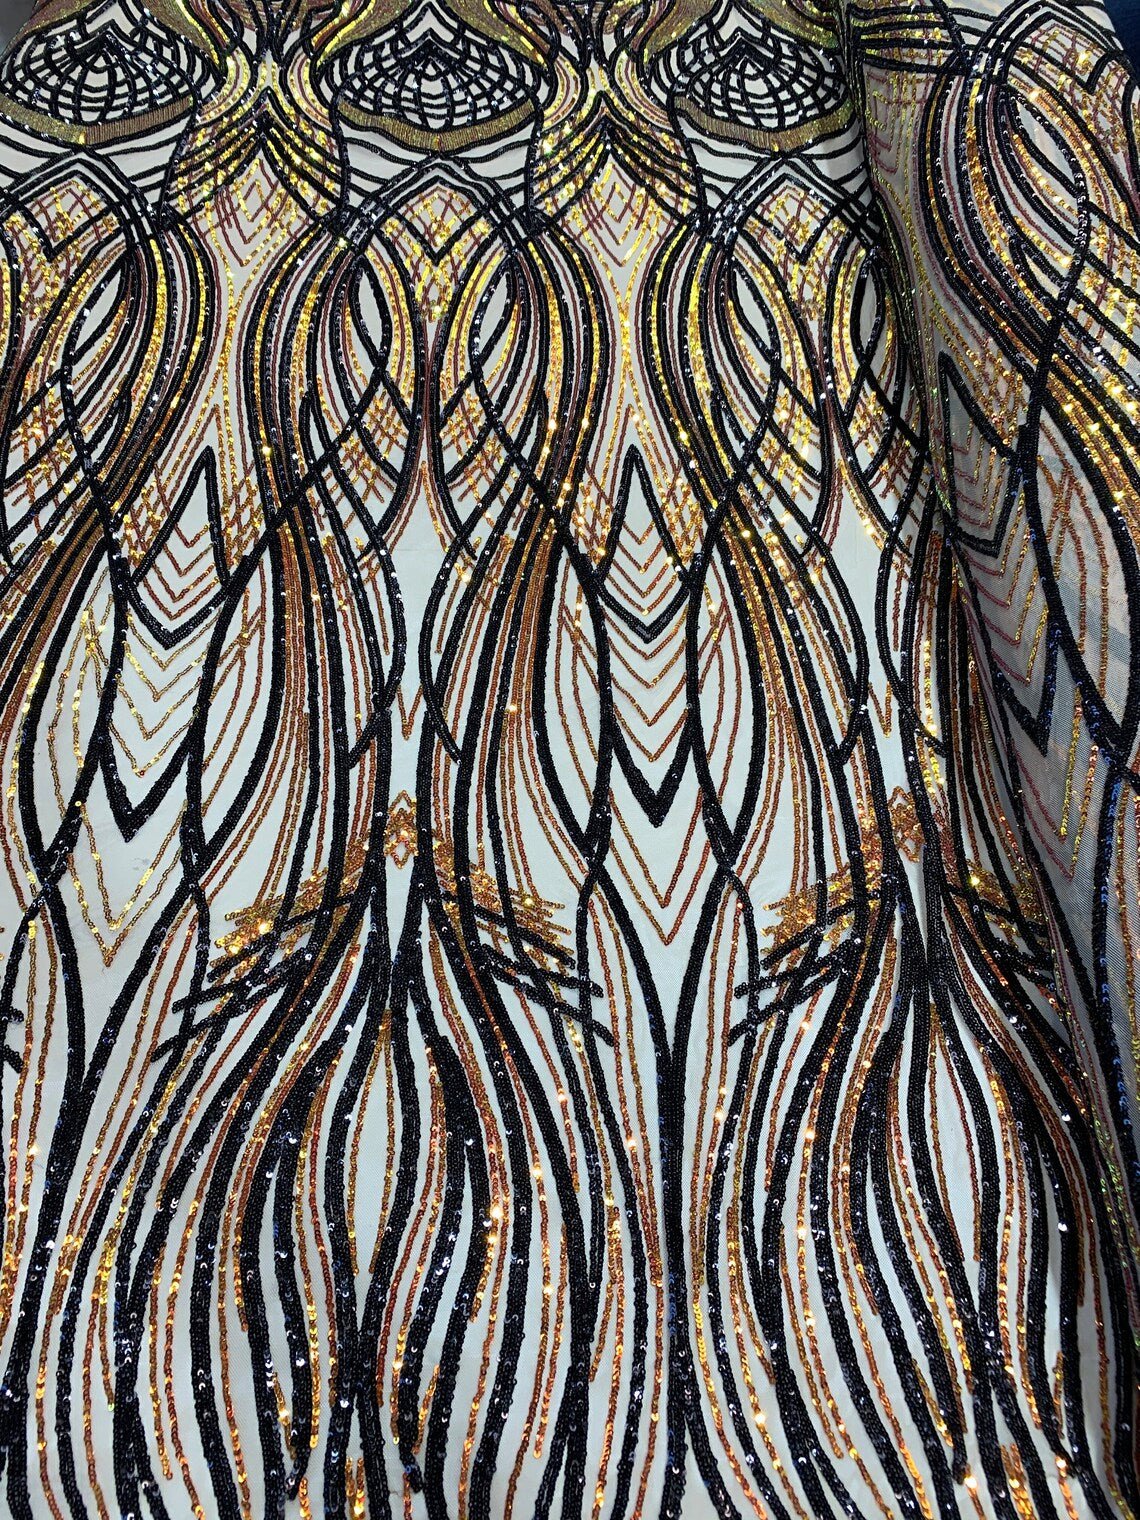 Peacock Iridescent Orange-Black Sequin Fabric on 4 Way stretch MeshICE FABRICSICE FABRICSBy The YardPeacock Iridescent Orange-Black Sequin Fabric on 4 Way stretch Mesh ICE FABRICS